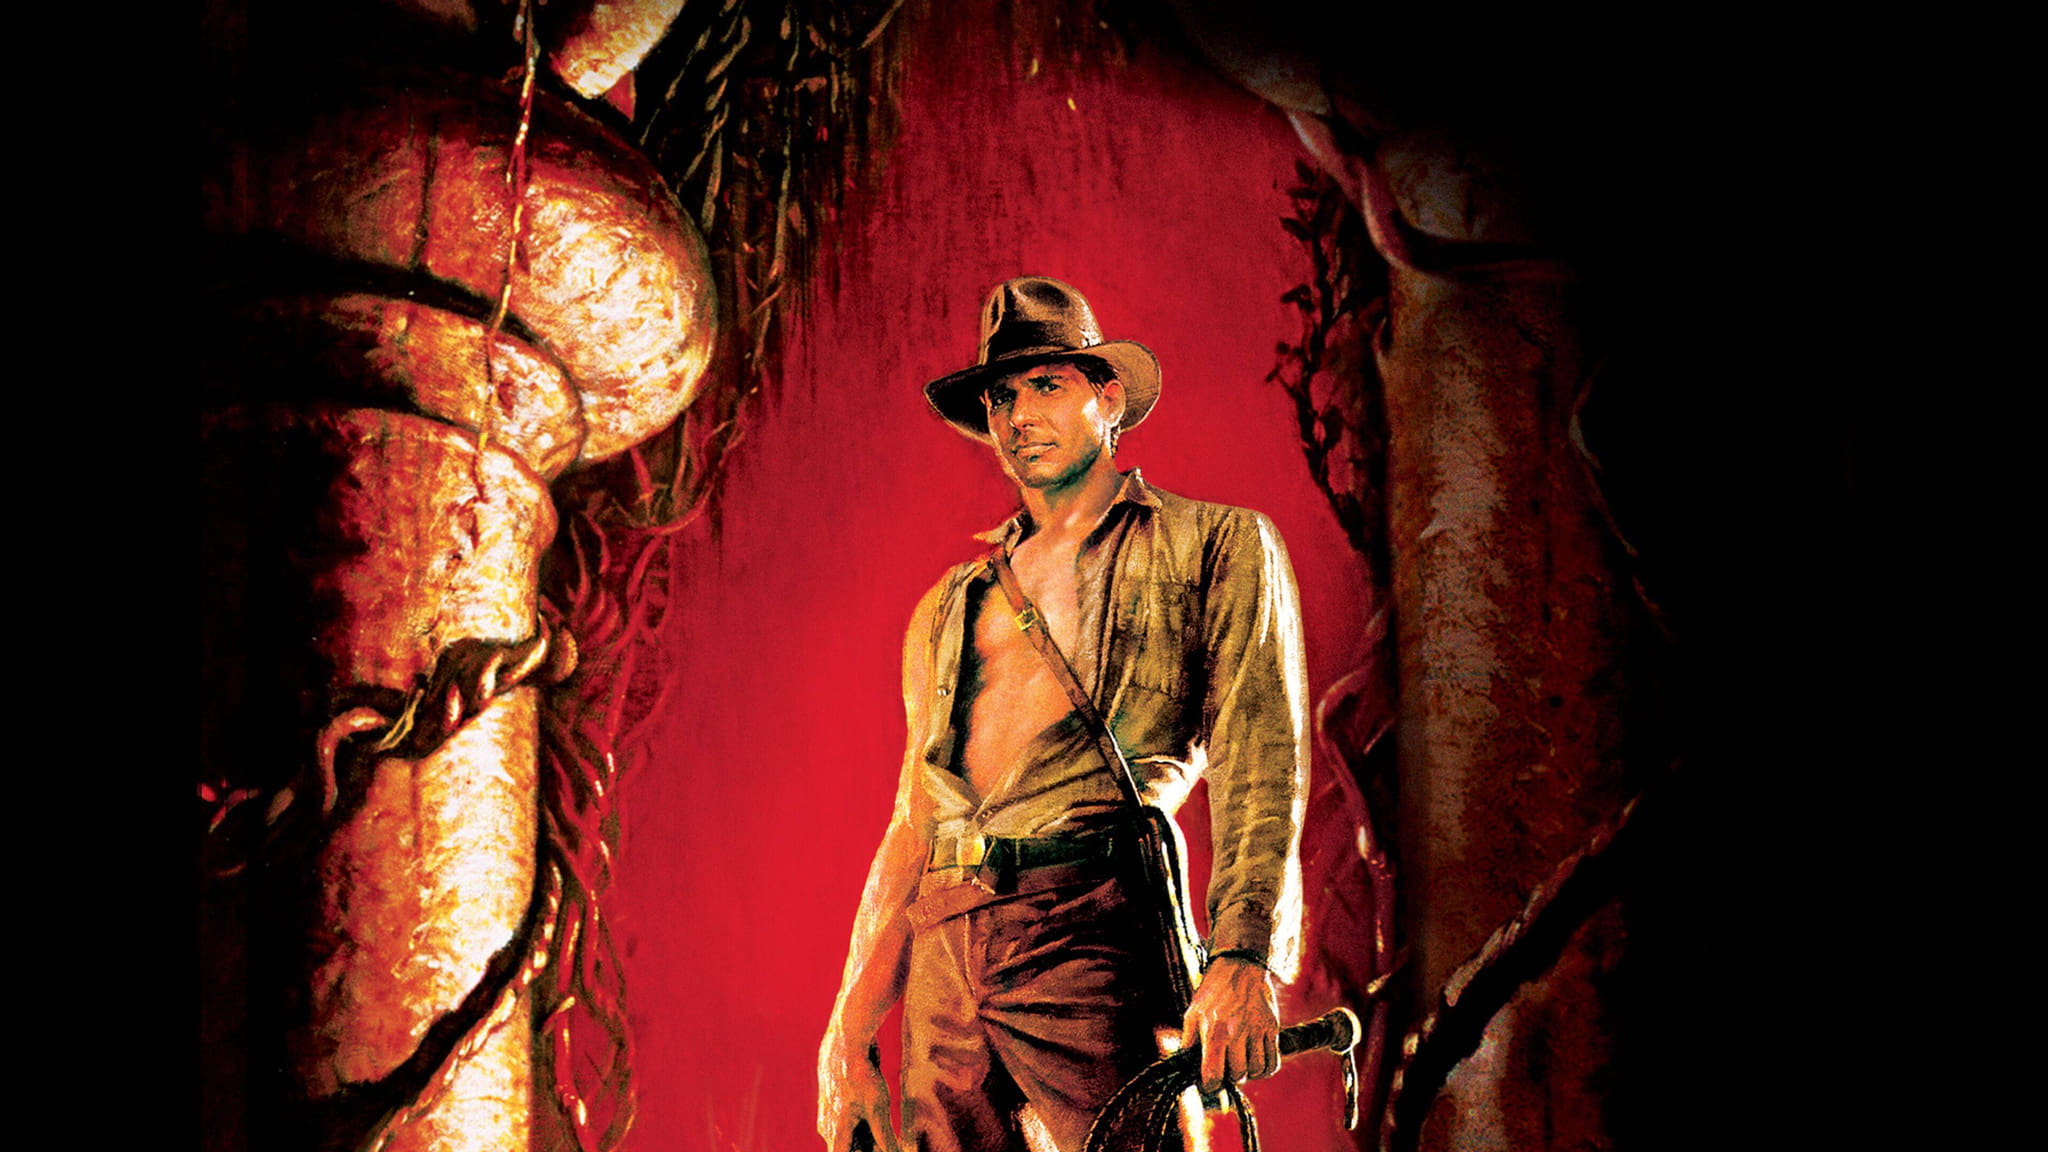 Image du film Indiana Jones et le Temple maudit xnjrlkow4vqrtbxyhovbcdwcjtqjpg